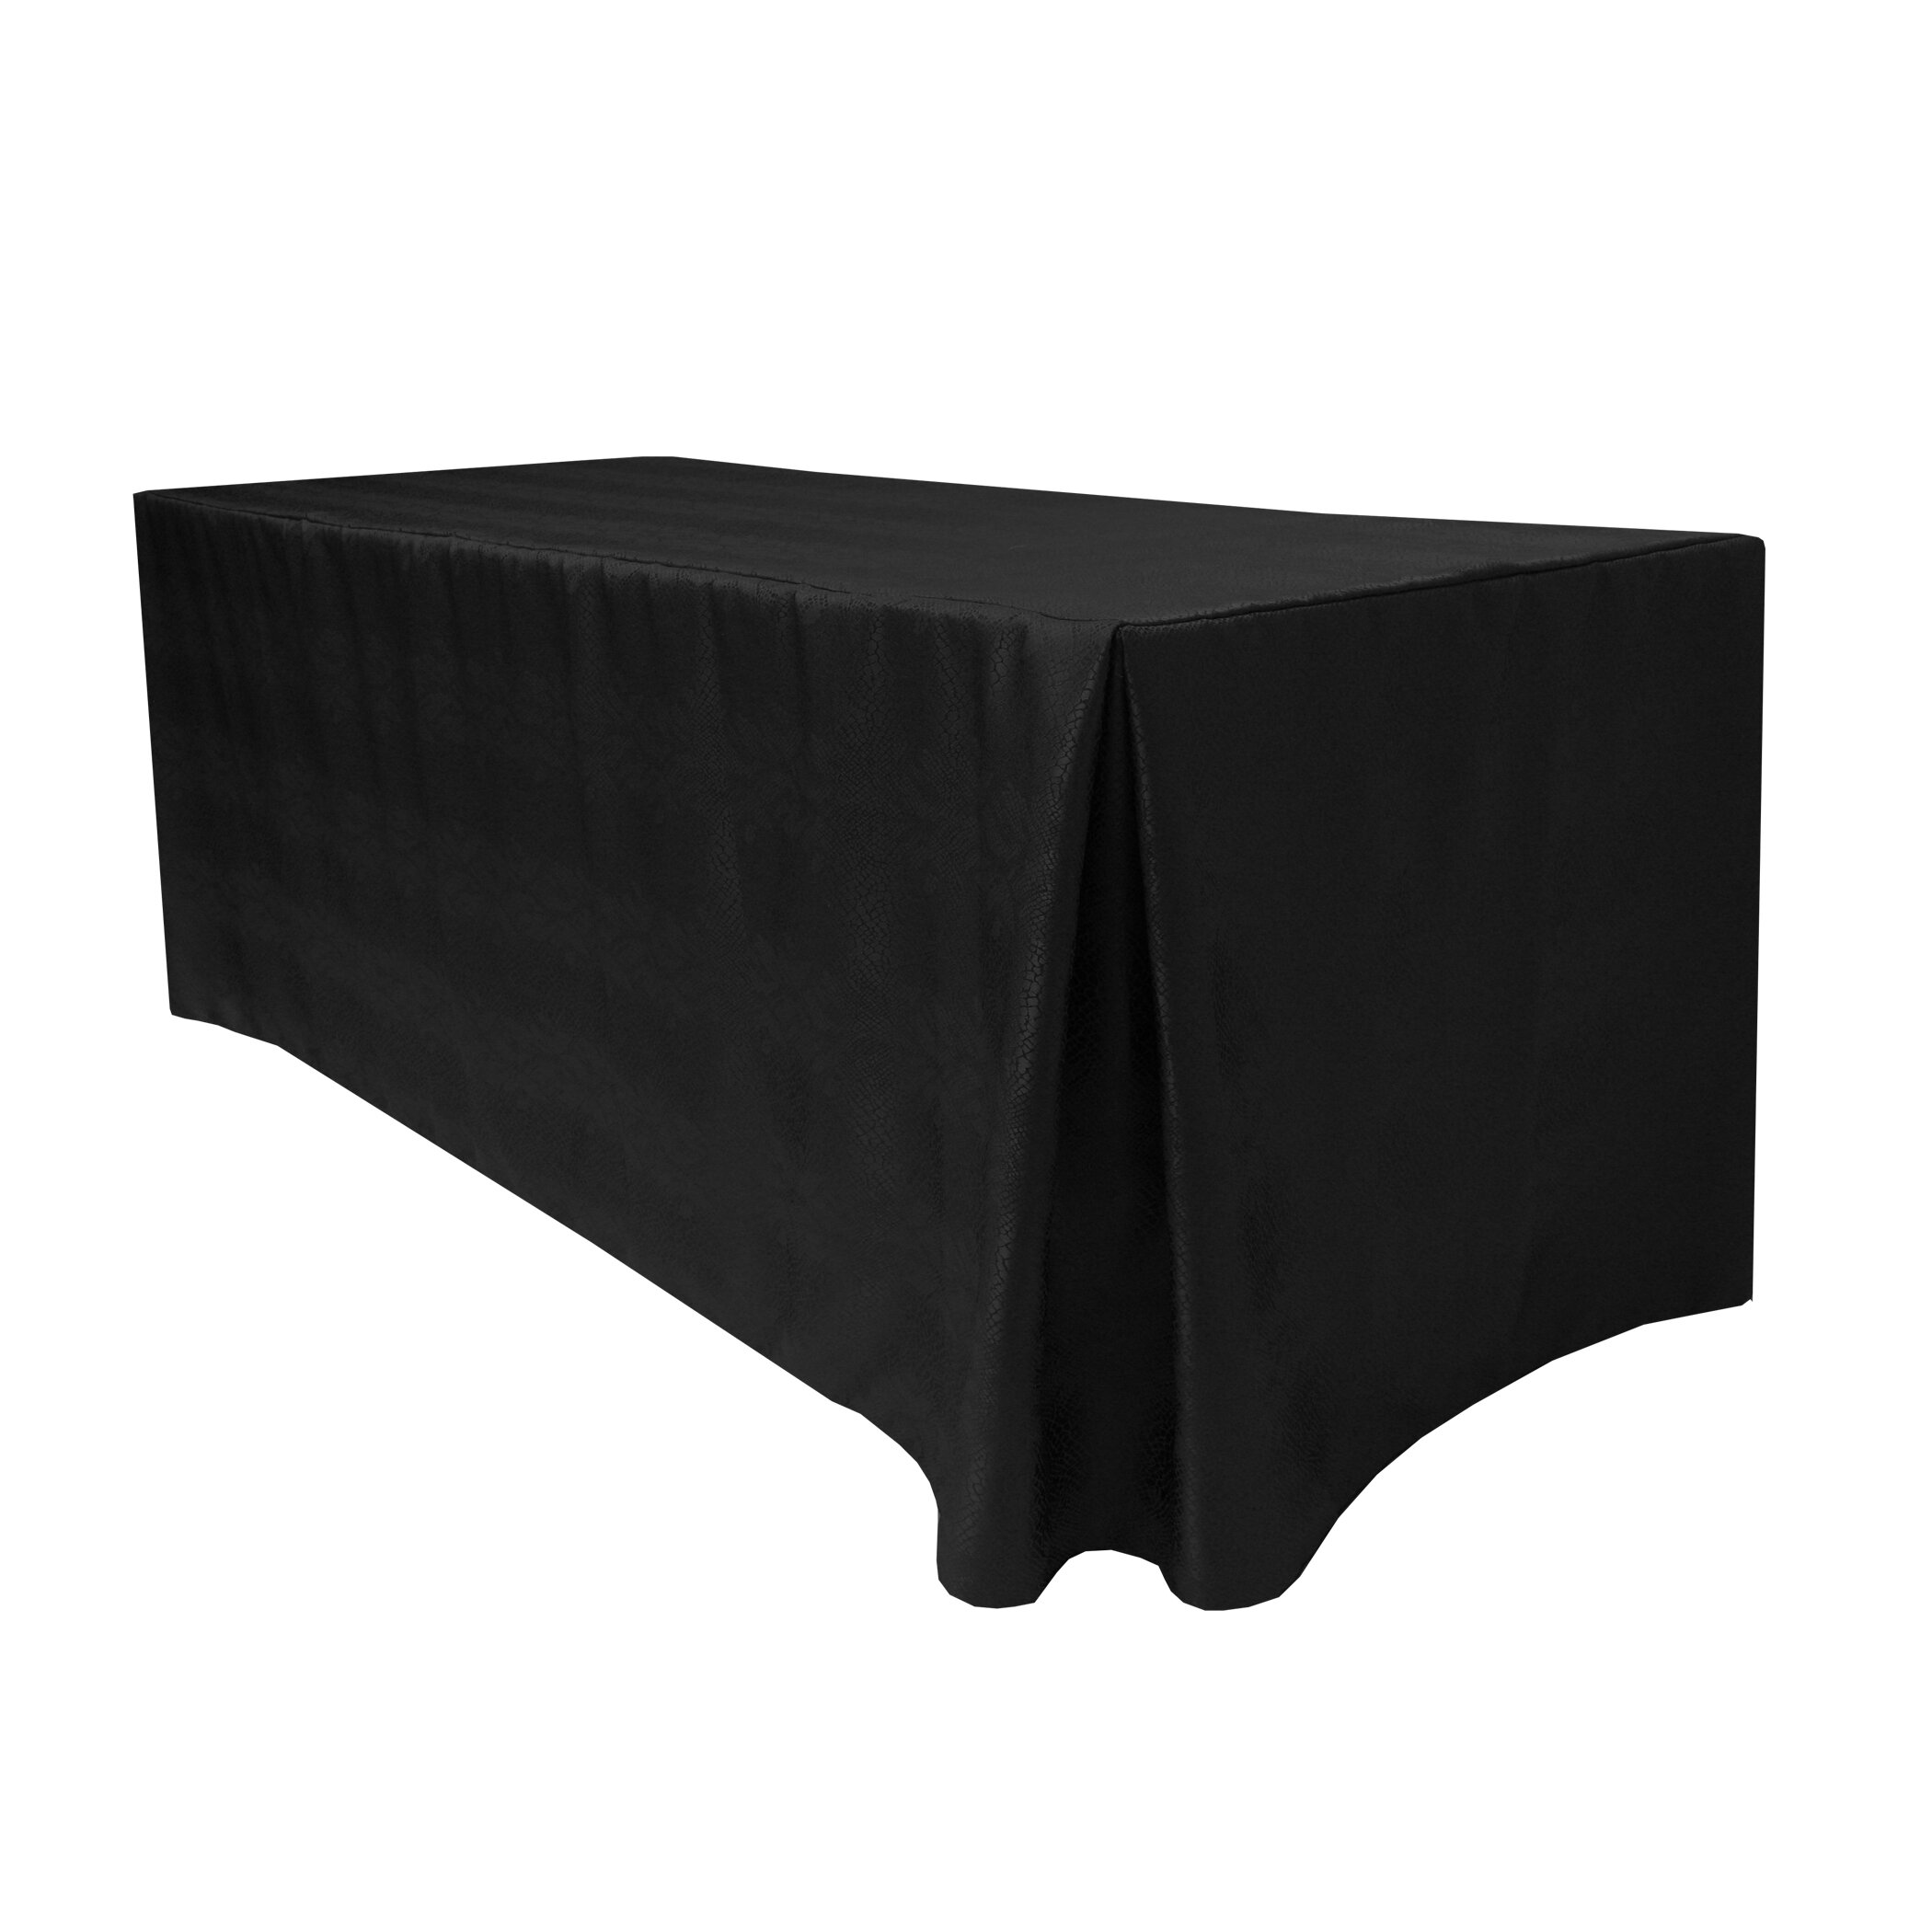 The Folding Table Cloth Black Rectangular 30x96x29 Black 2 PACK 